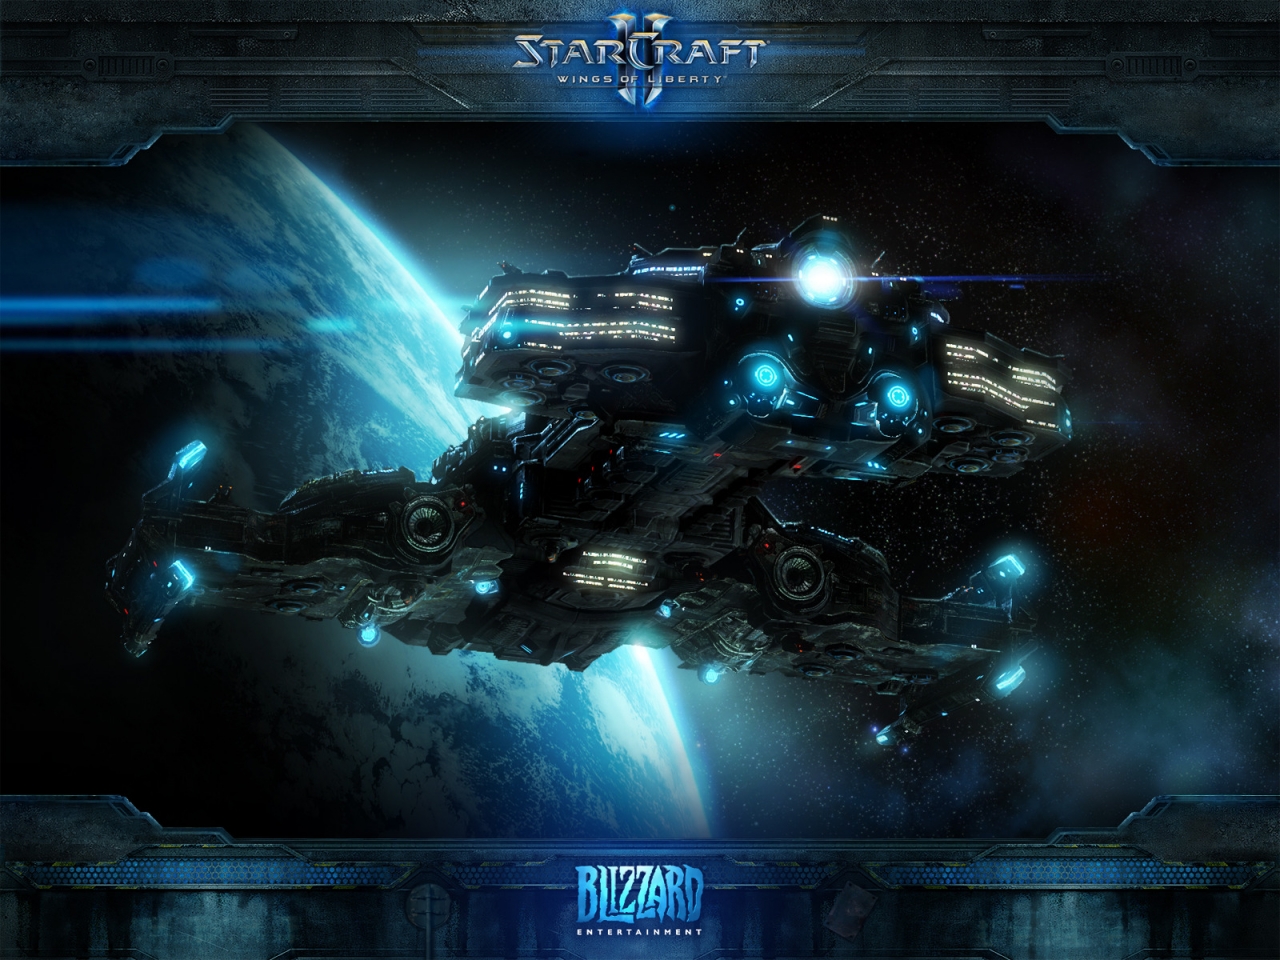 Starcraft 2 Ship for 1280 x 960 resolution